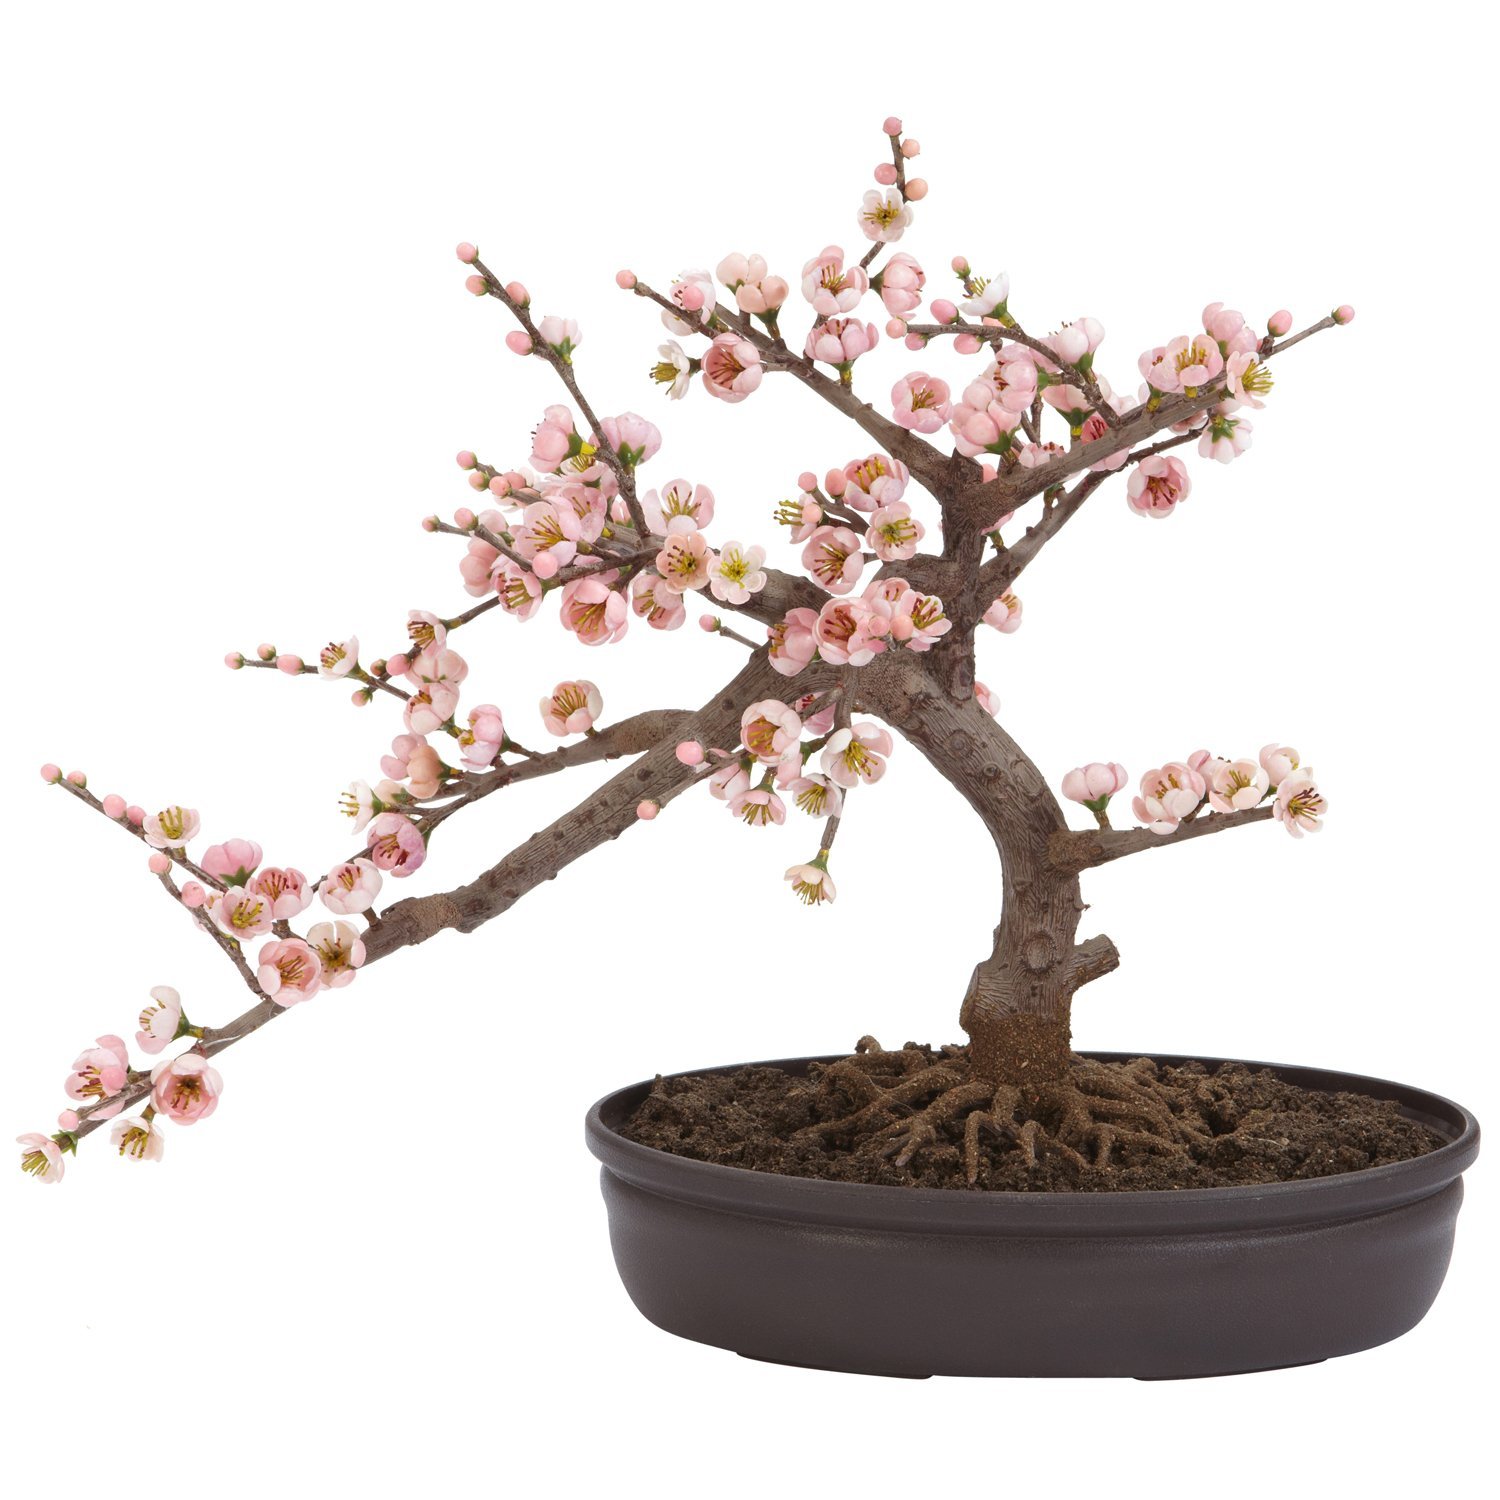 Amazon.com: Nearly Natural 4764 Cherry Blossom Bonsai Artificial ...